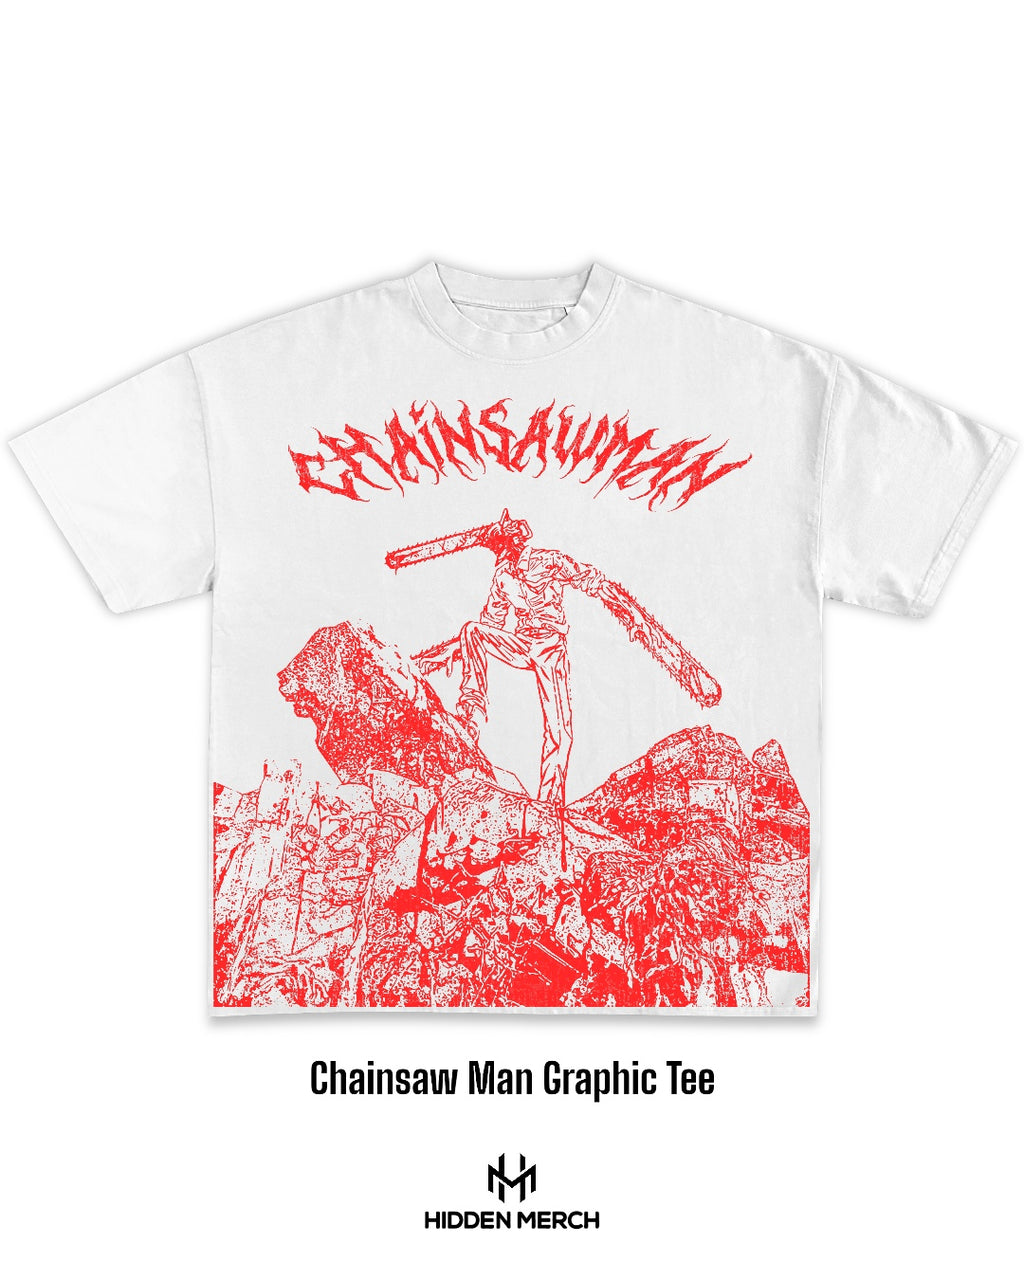 Chainsaw Man Graphic Tee